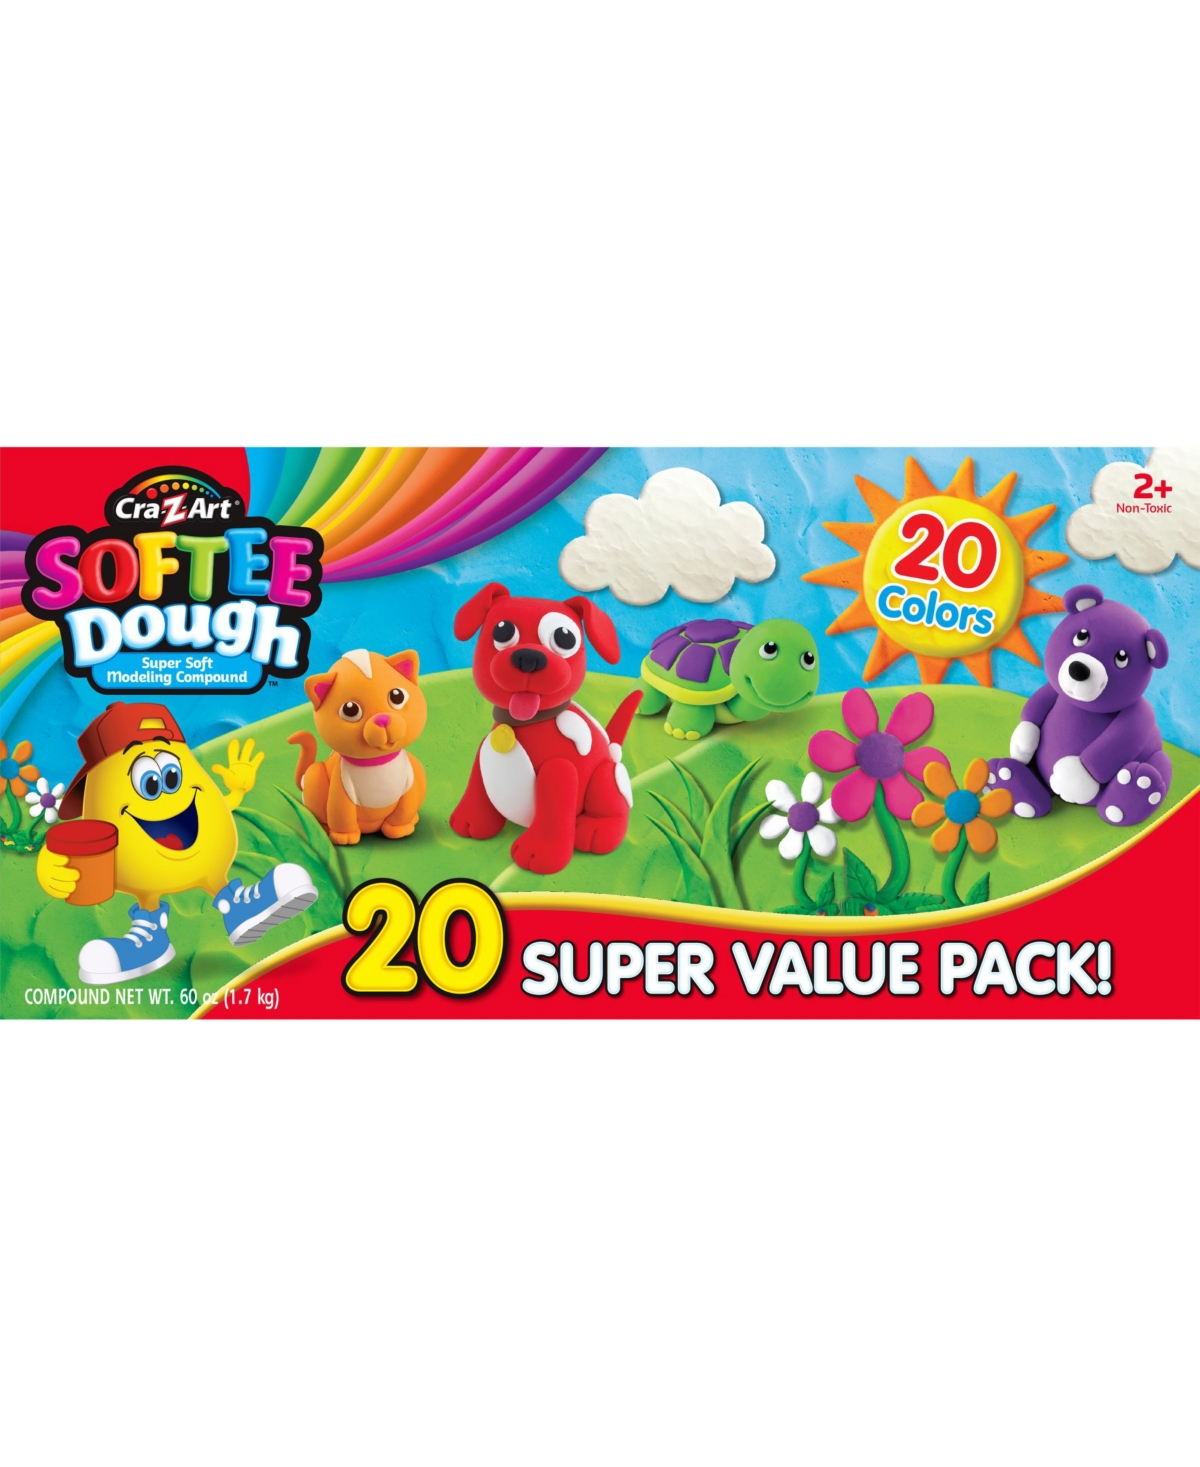 Cra Z Art Softee Dough Super Soft Modeling Compound Super Value 20 Pack - Multi